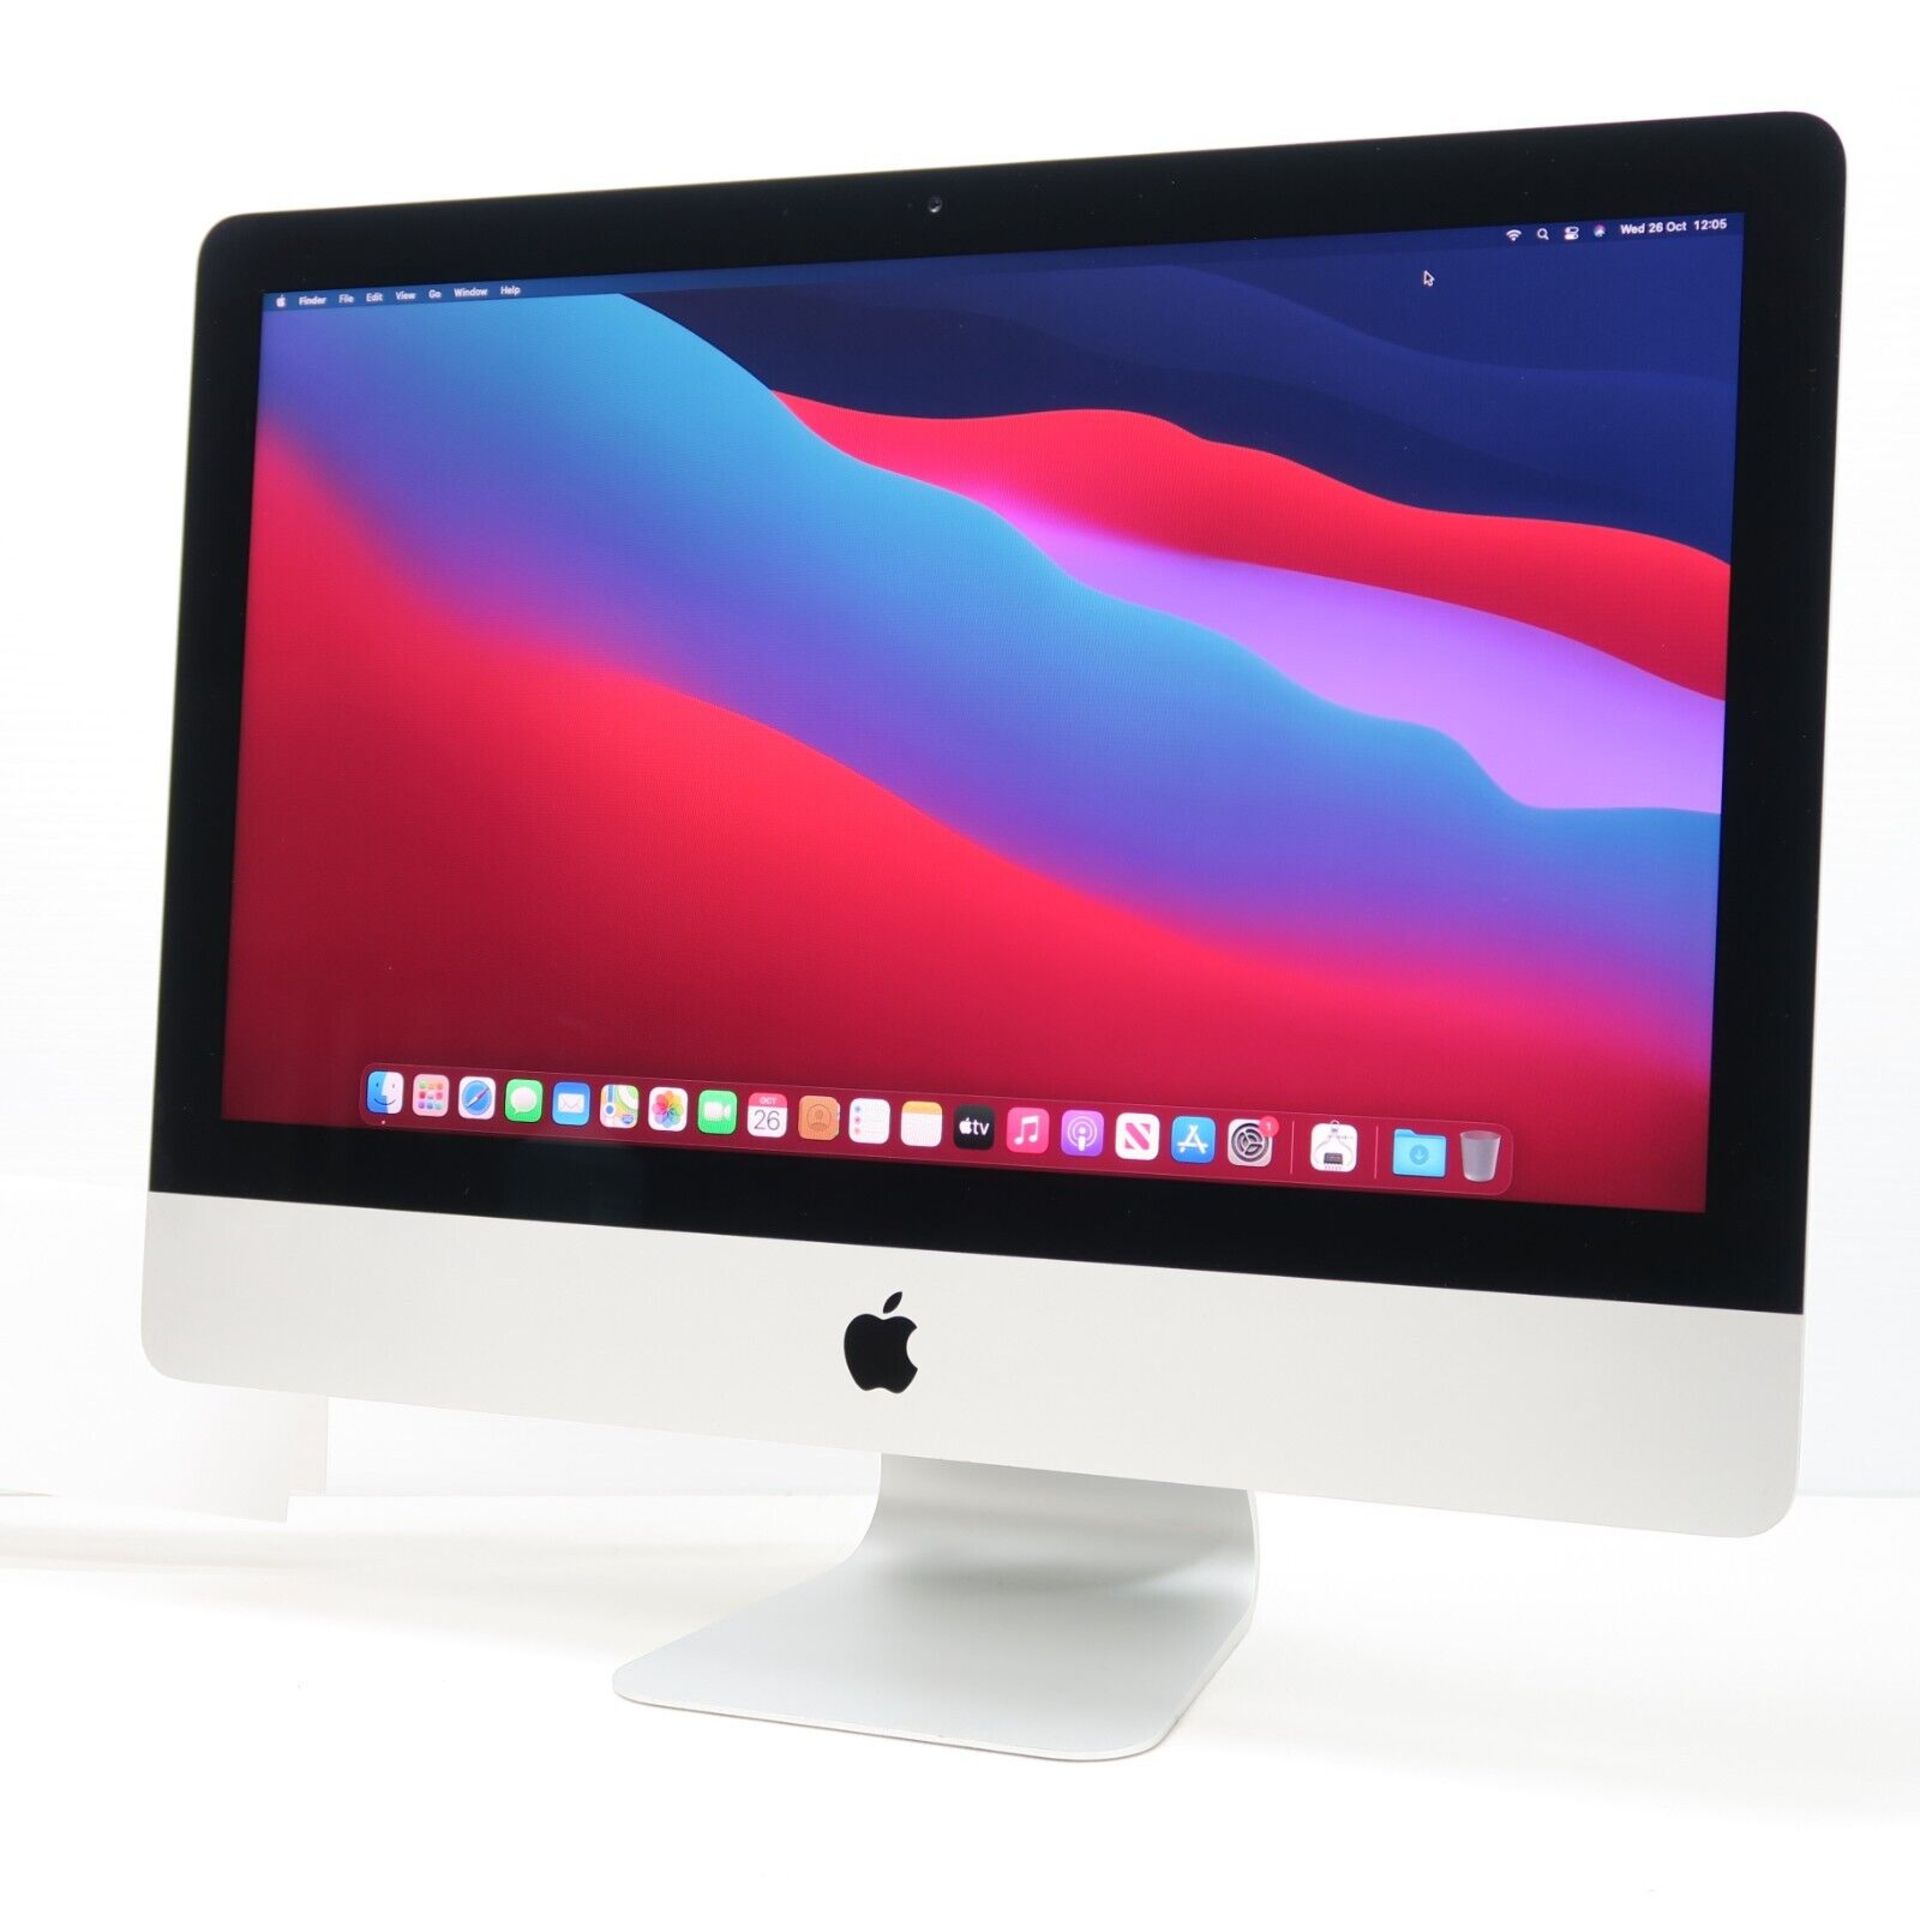 Apple iMac 21.5” A1418 (2012) OS X Catalina Intel Core i5 Quad Core 8GB Memory 1TB HD WiFi Office